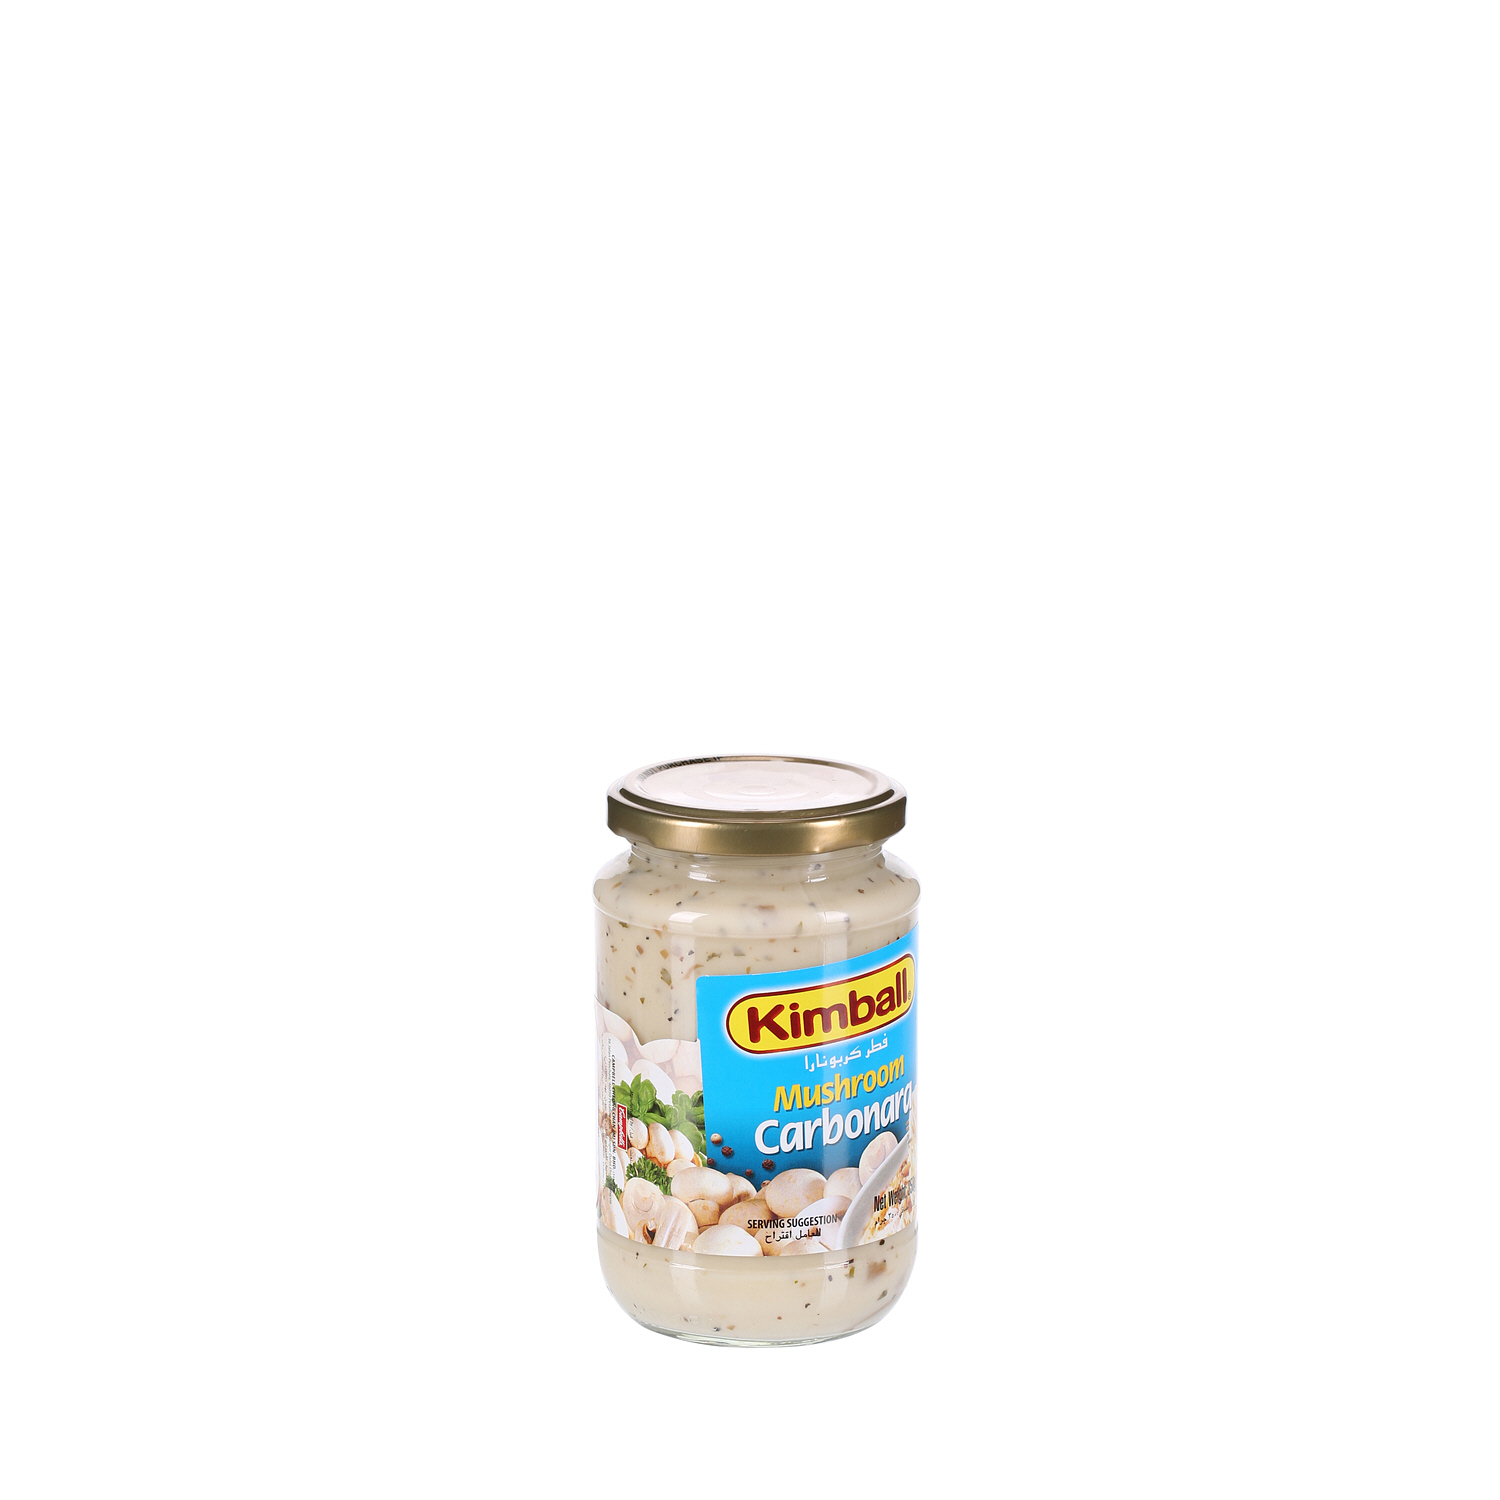 Kimball Mushroom Carbonara Sauce 350 g